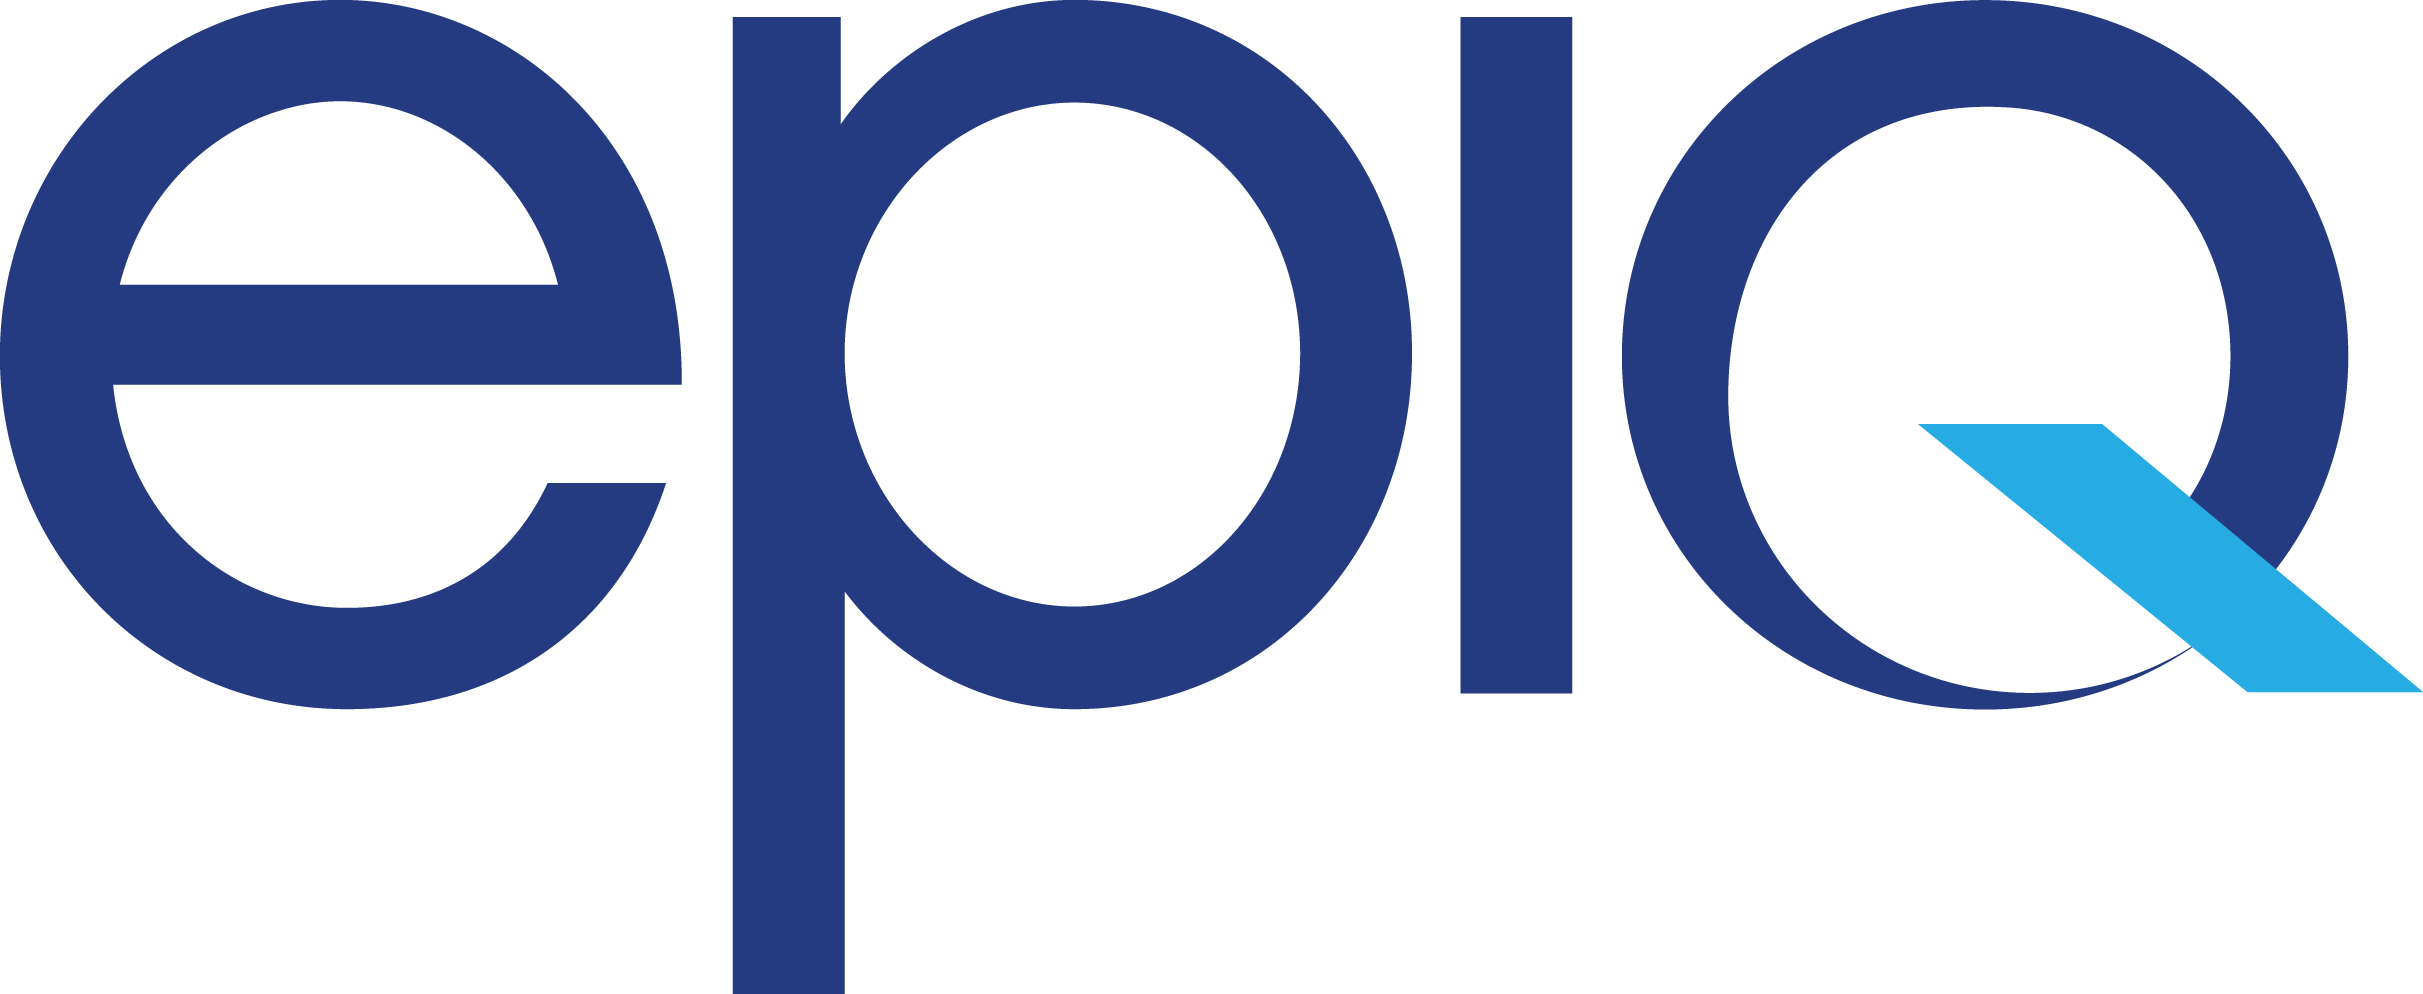 1470 Epiq Hong Kong, Limited company logo